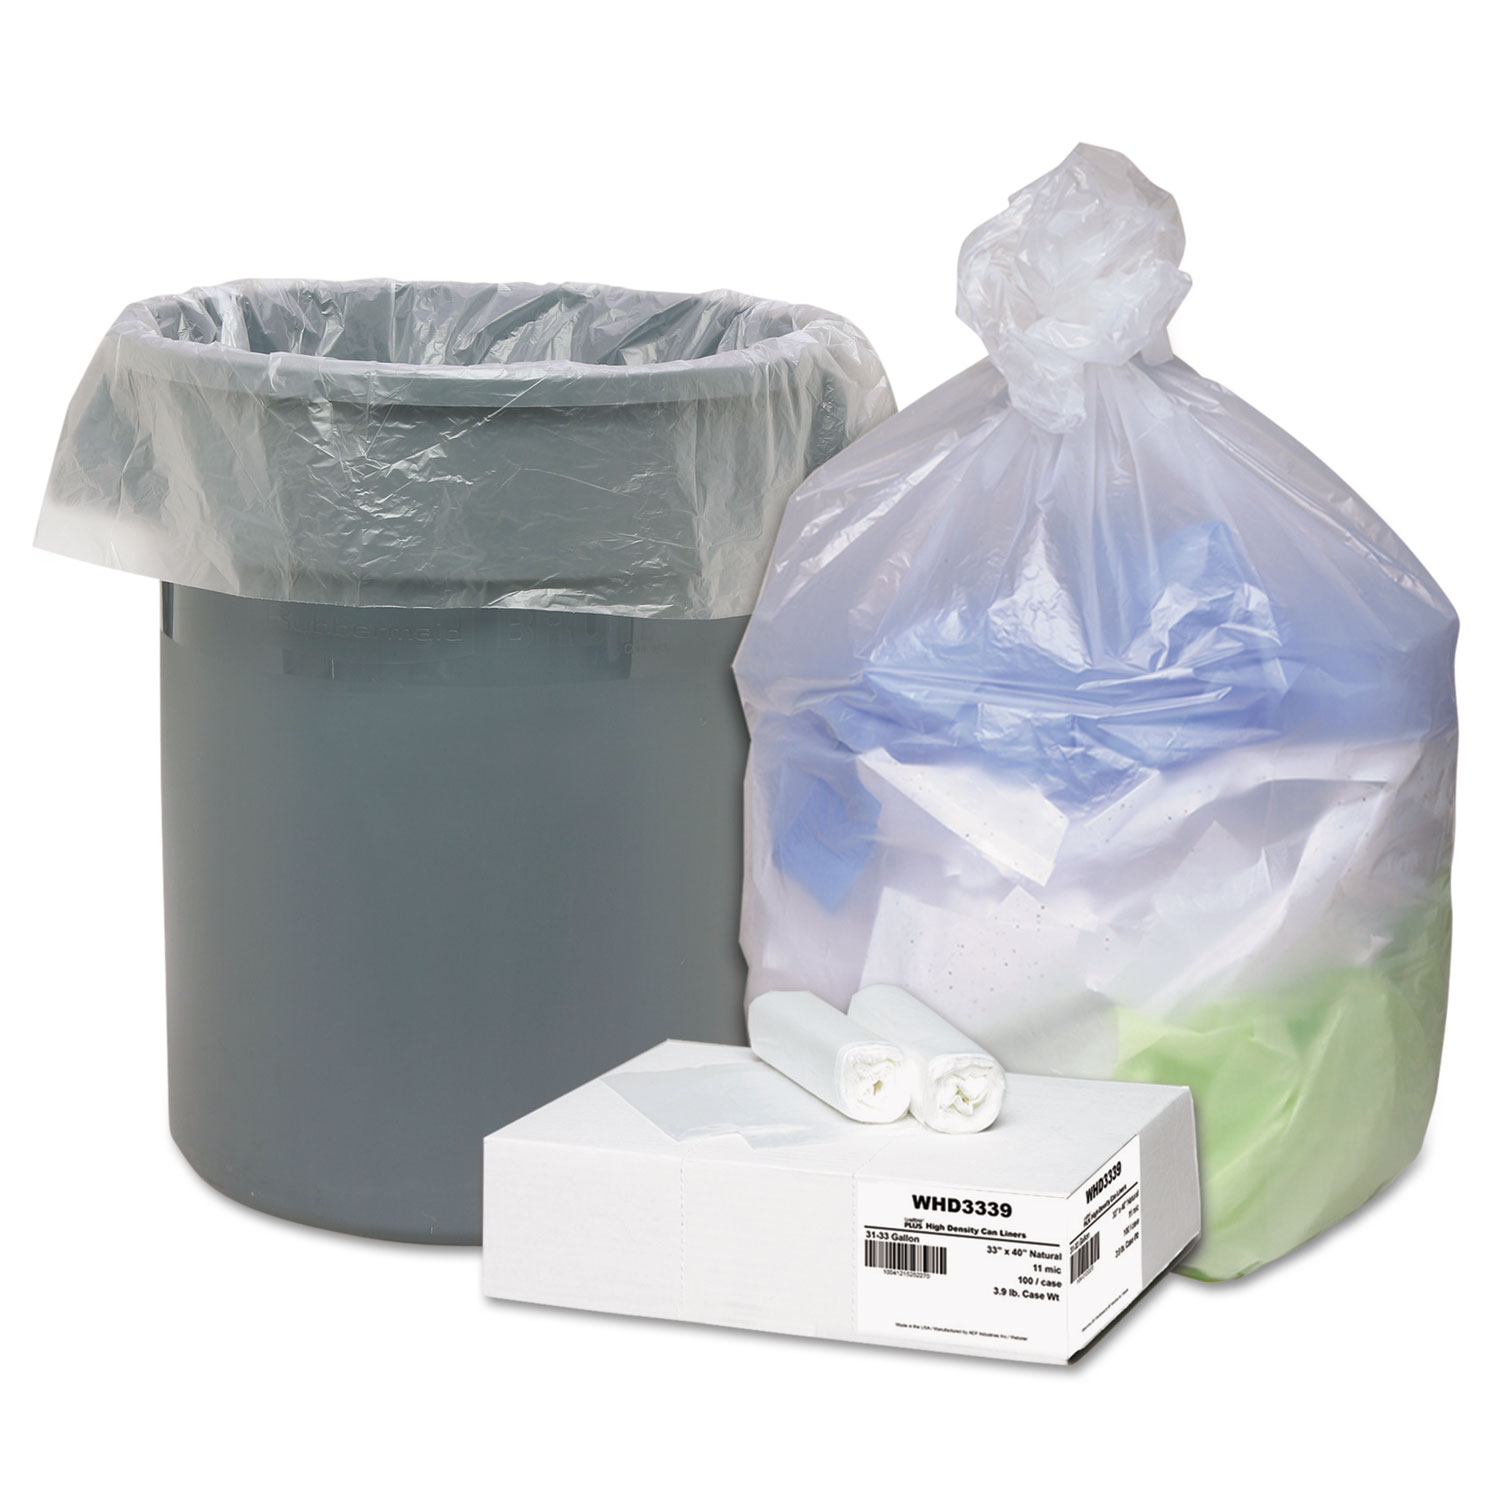 31-33 Gallon Black Trash Bags 33x39 1.5 Mil 100 Bags